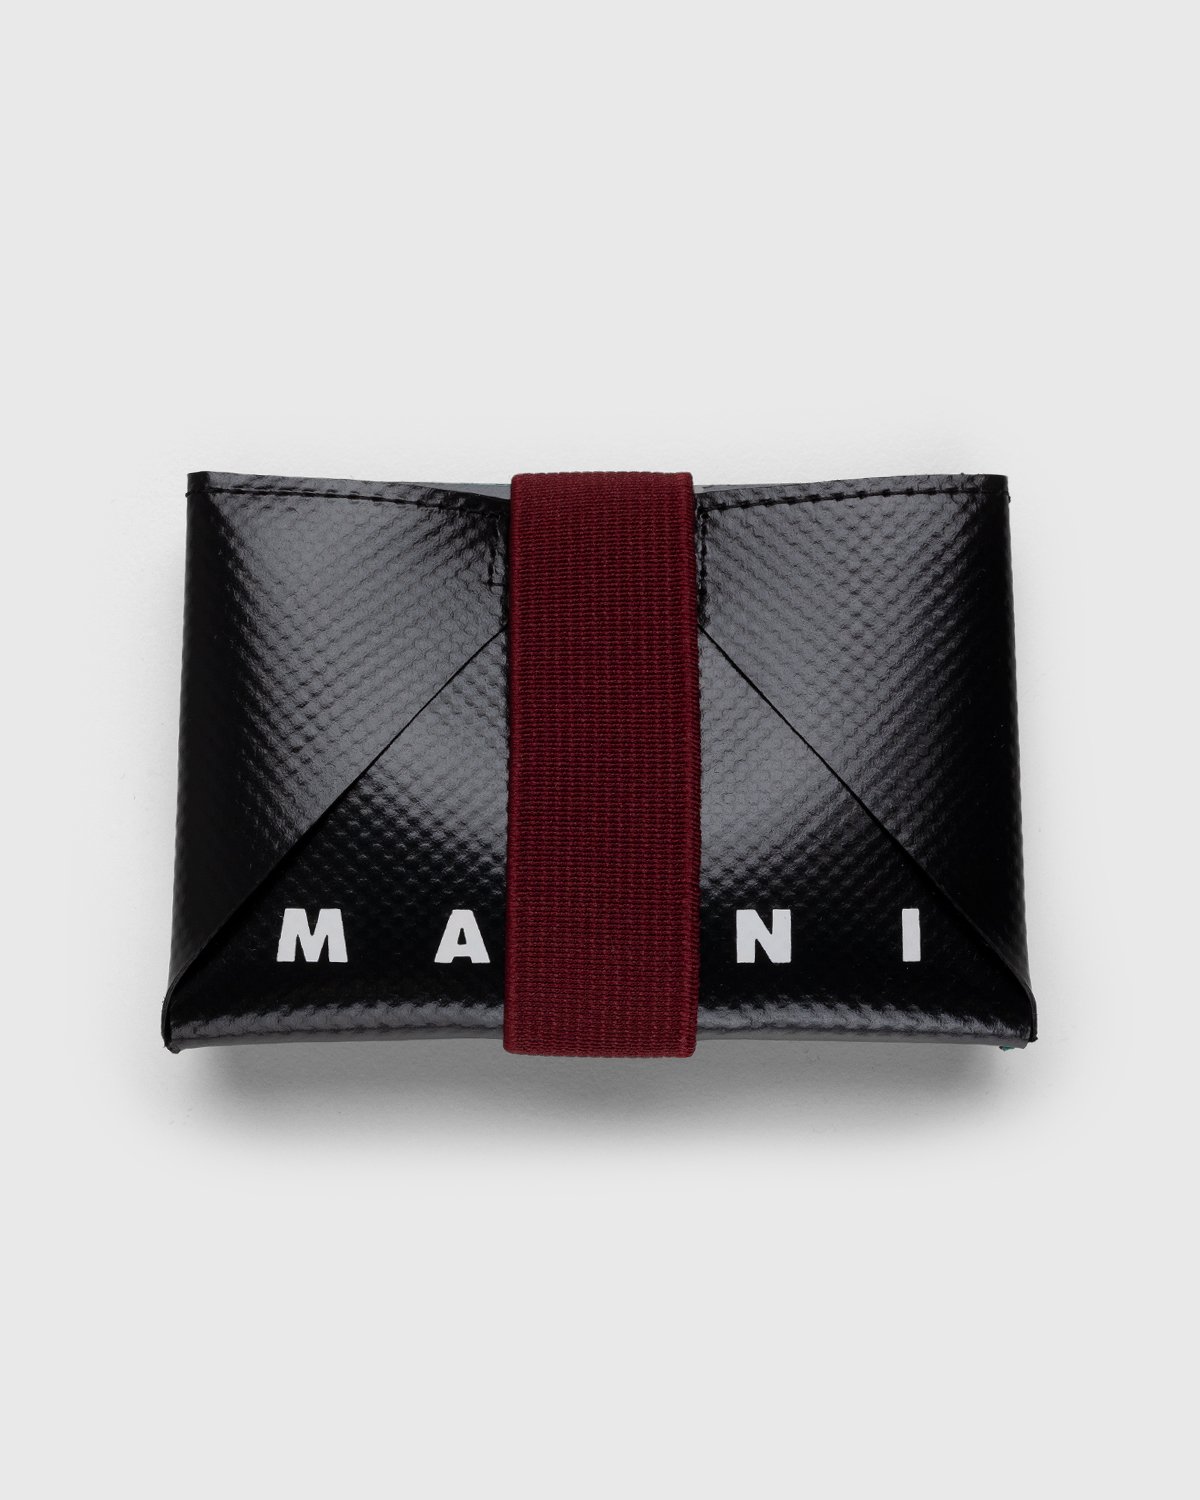 Marni – Origami Card Holder Black/Green | Highsnobiety Shop